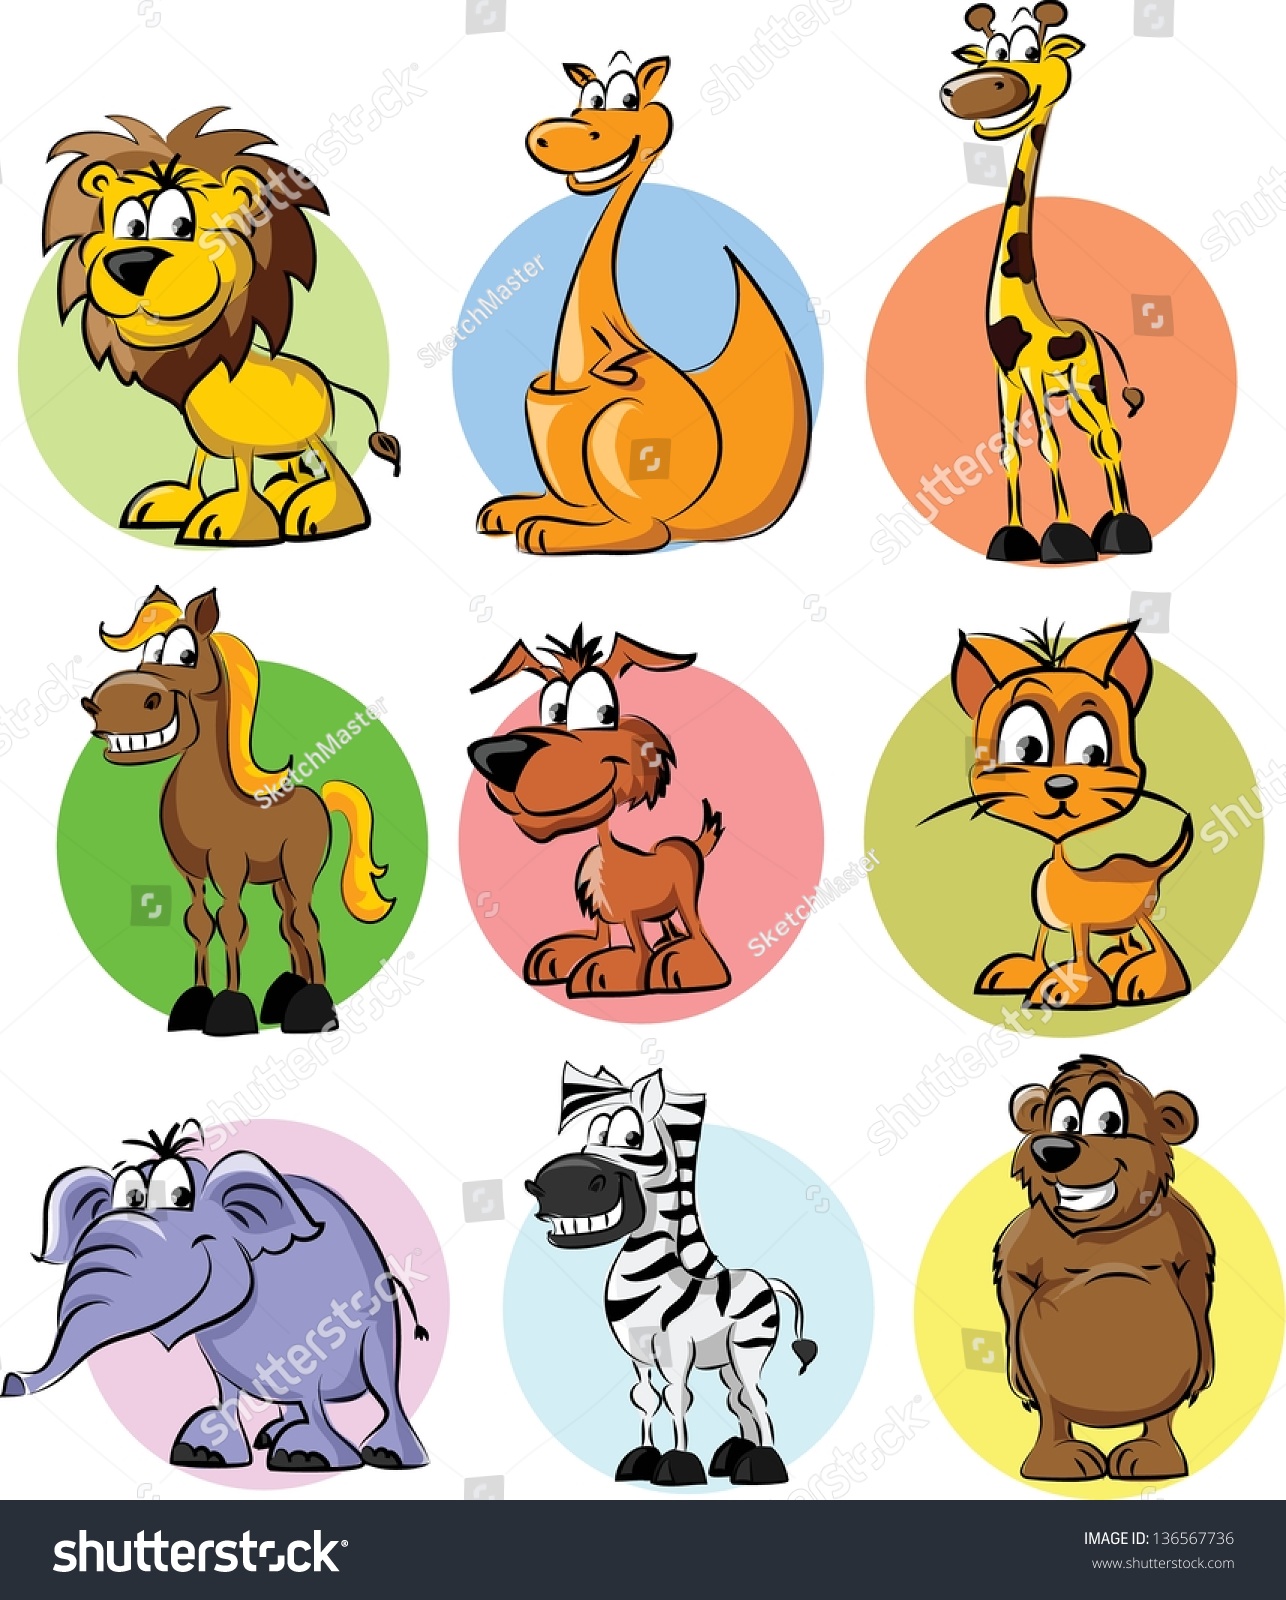 Cartoon Animals - Vector - 136567736 : Shutterstock